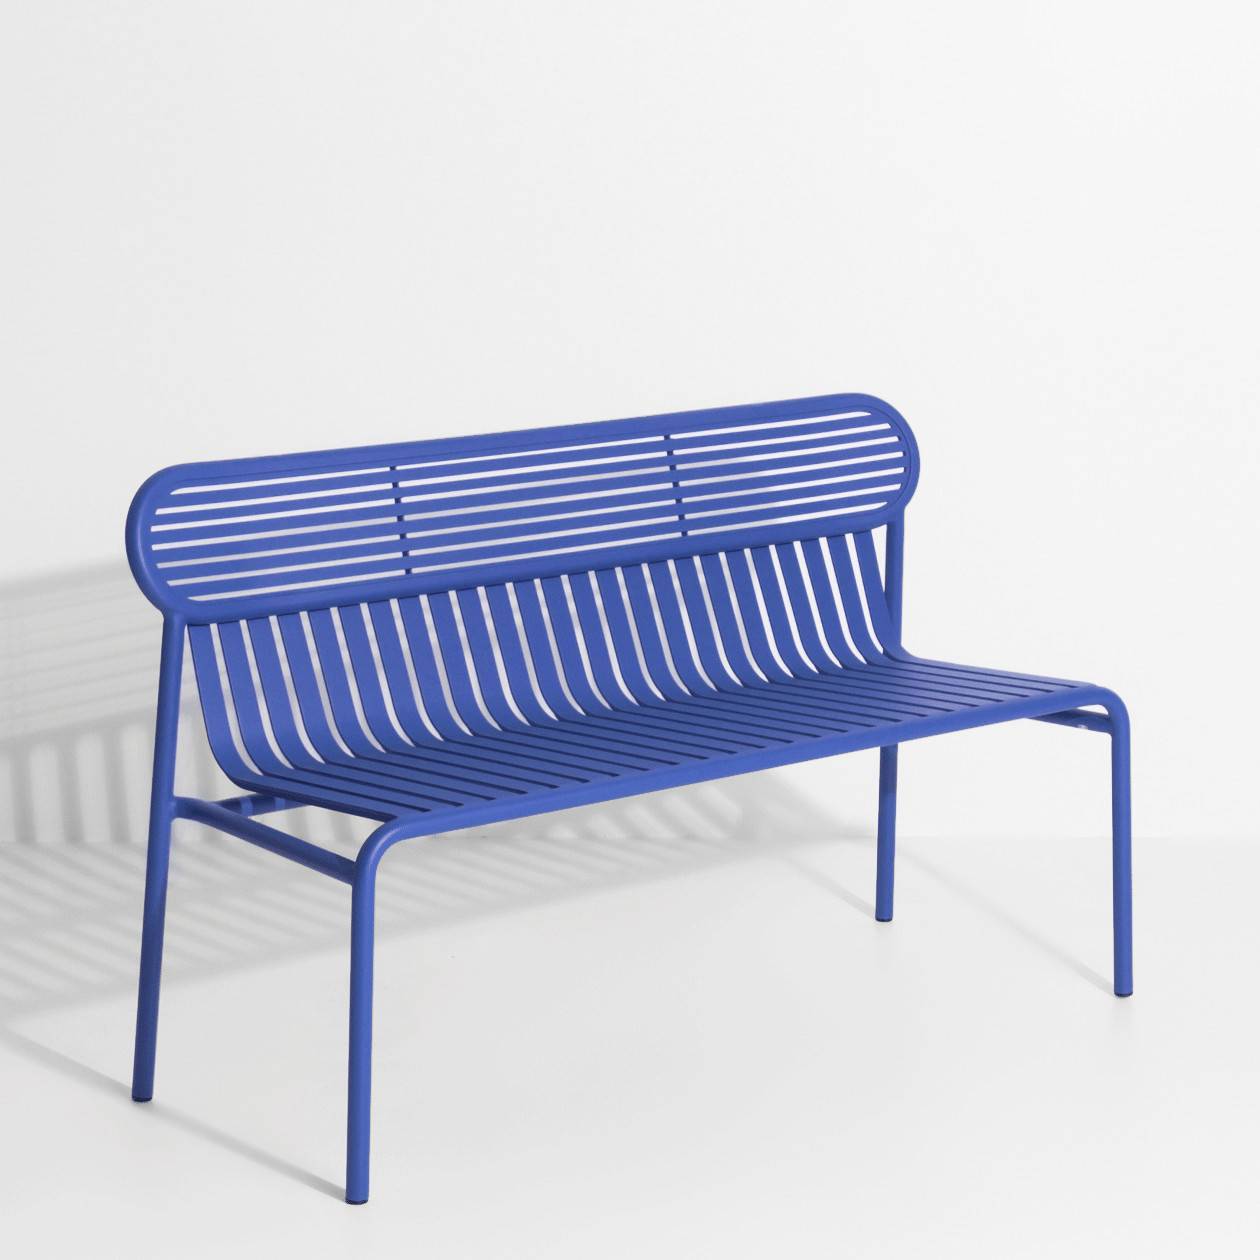 Blue metal garden bench - Petite Friture